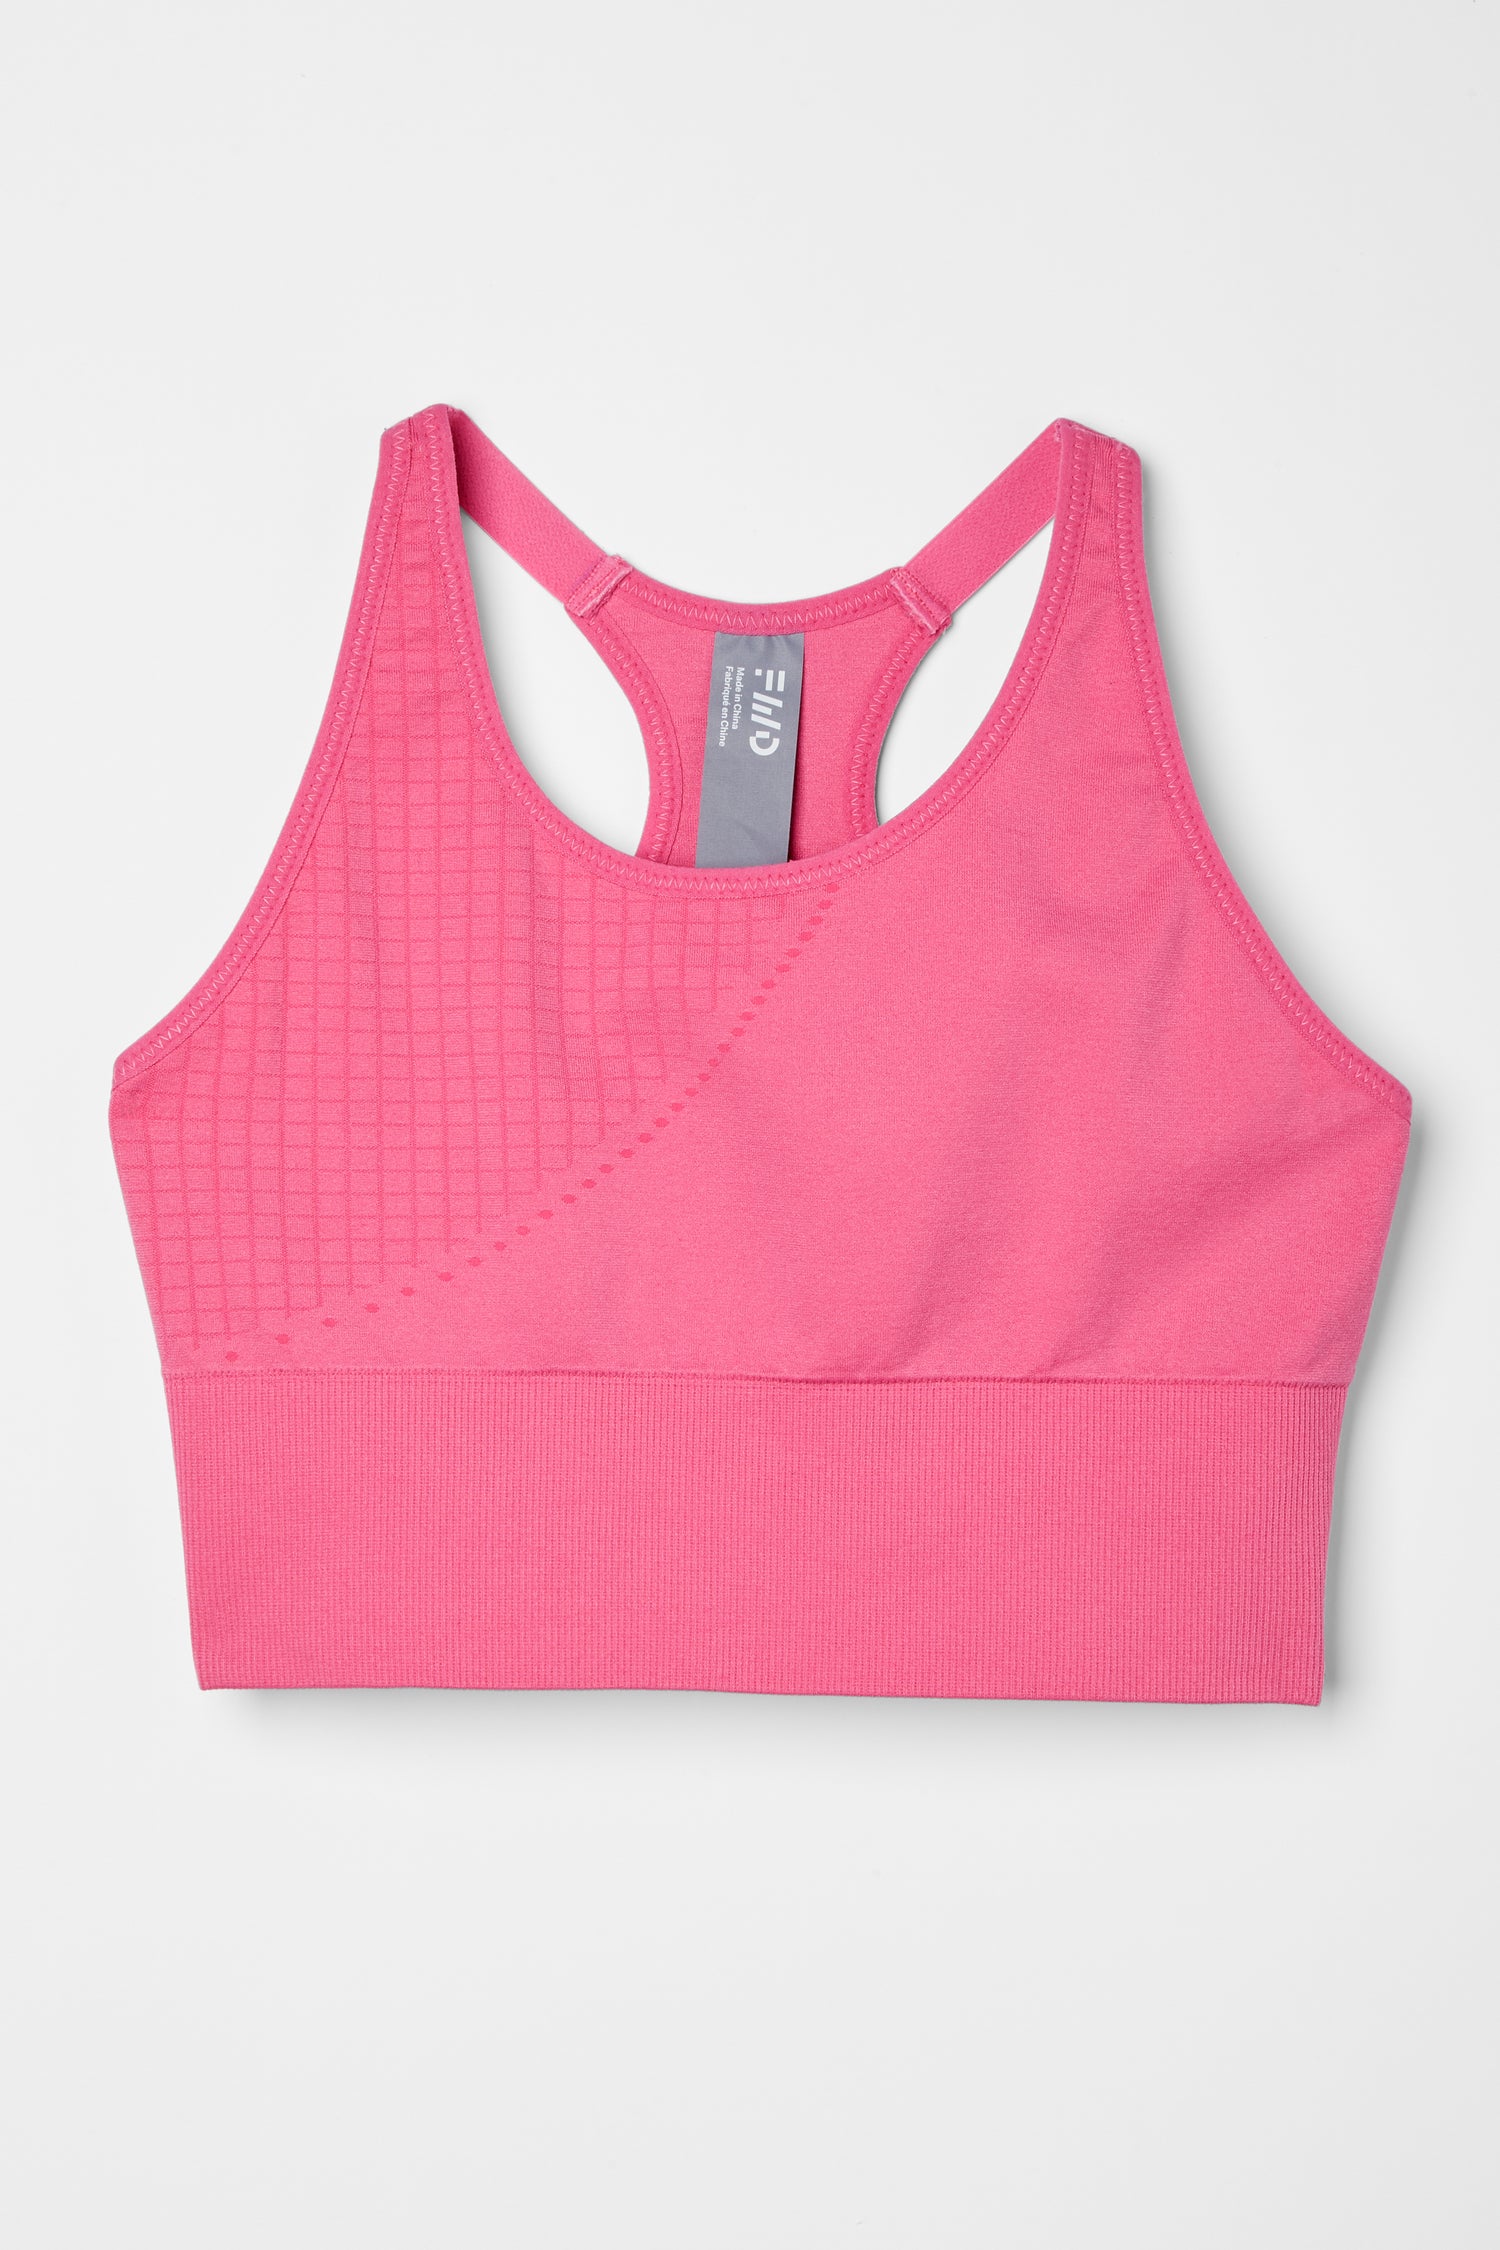 Buy Pink PINK Flip It Seamless Reversible Sports Bra online in